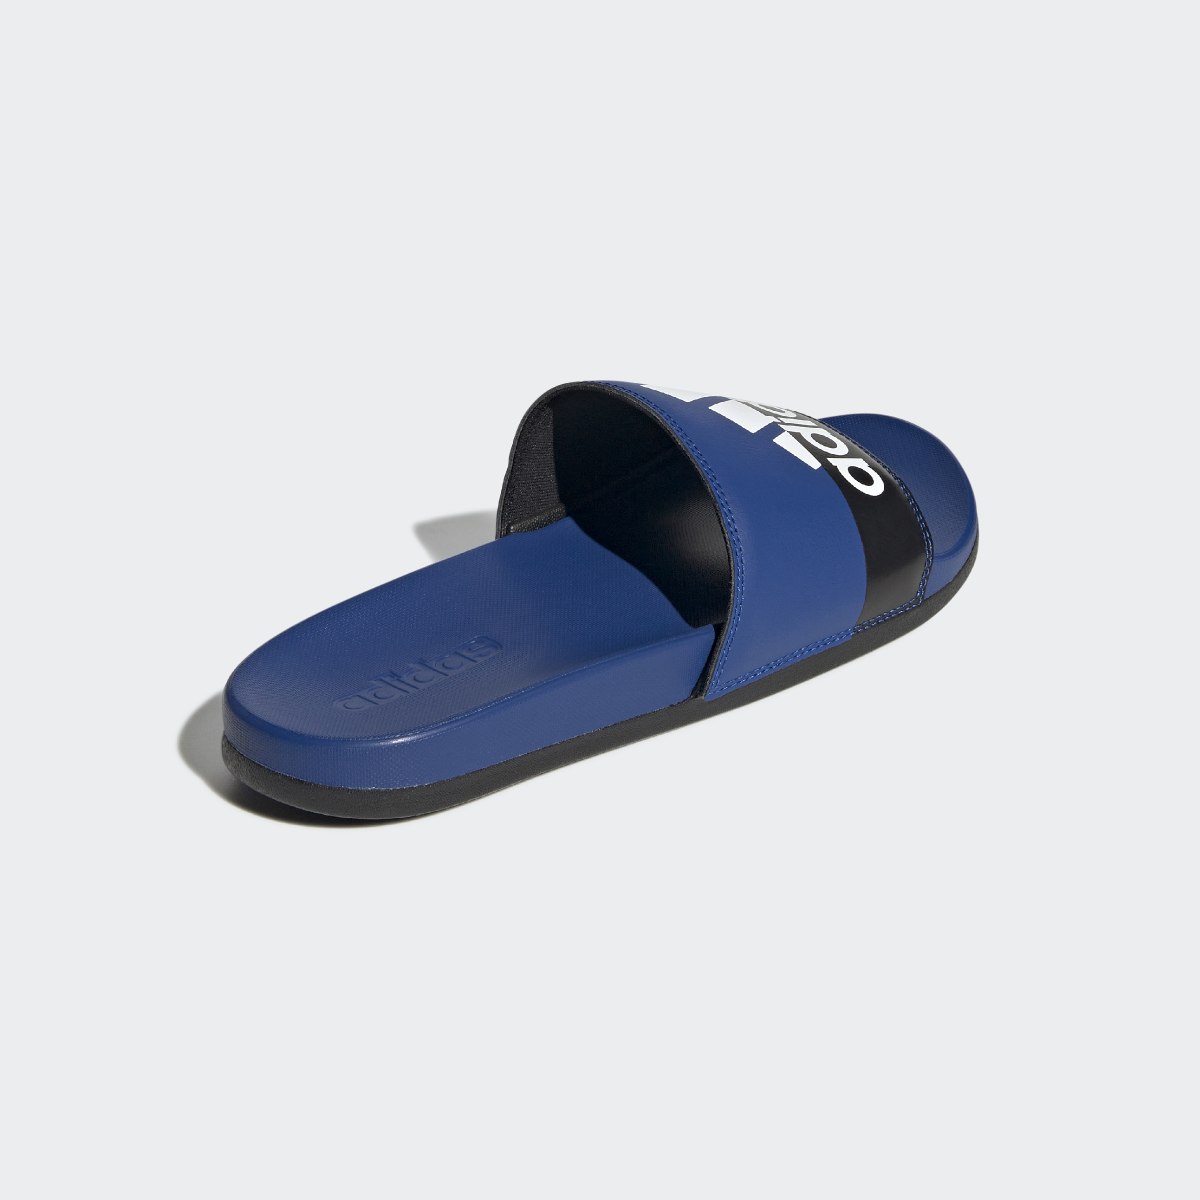 Adidas Adilette Comfort Sandals. 6